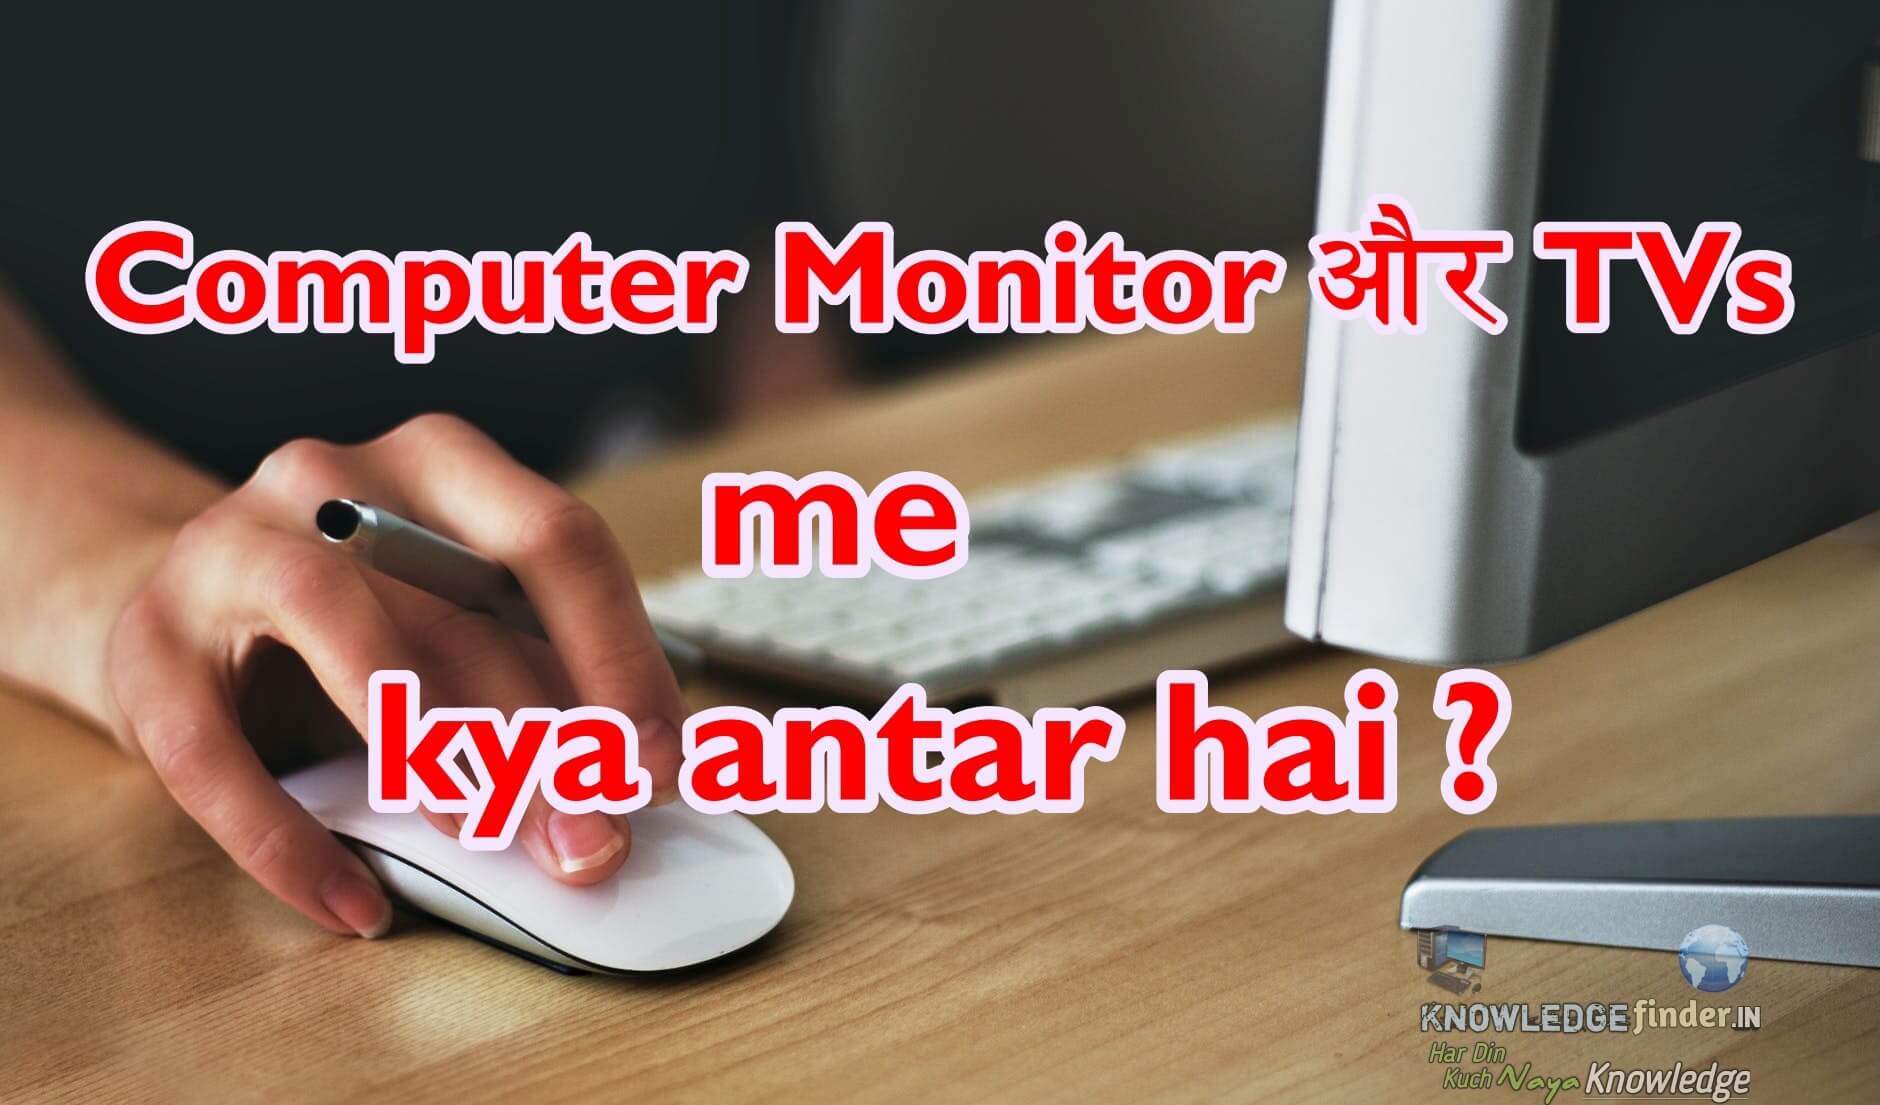 Computer Monitor vs TVs, Tv or Monitor me kya antar hai ? Purah jankari Hindi me